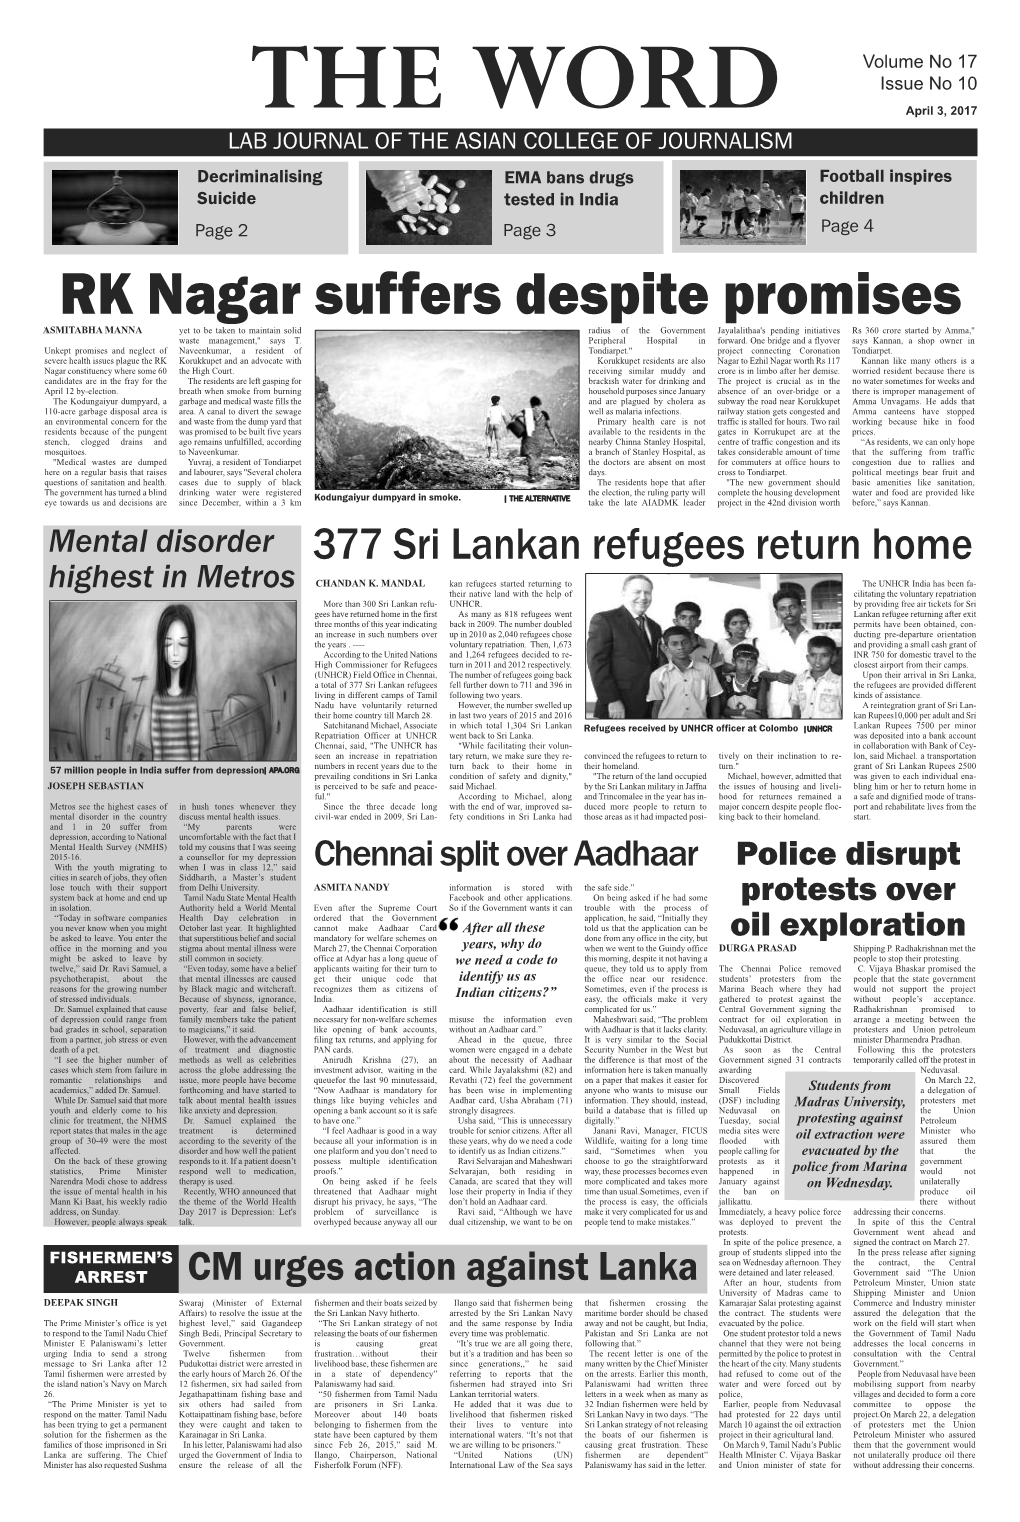 RK Nagar Suffers Despite Promises